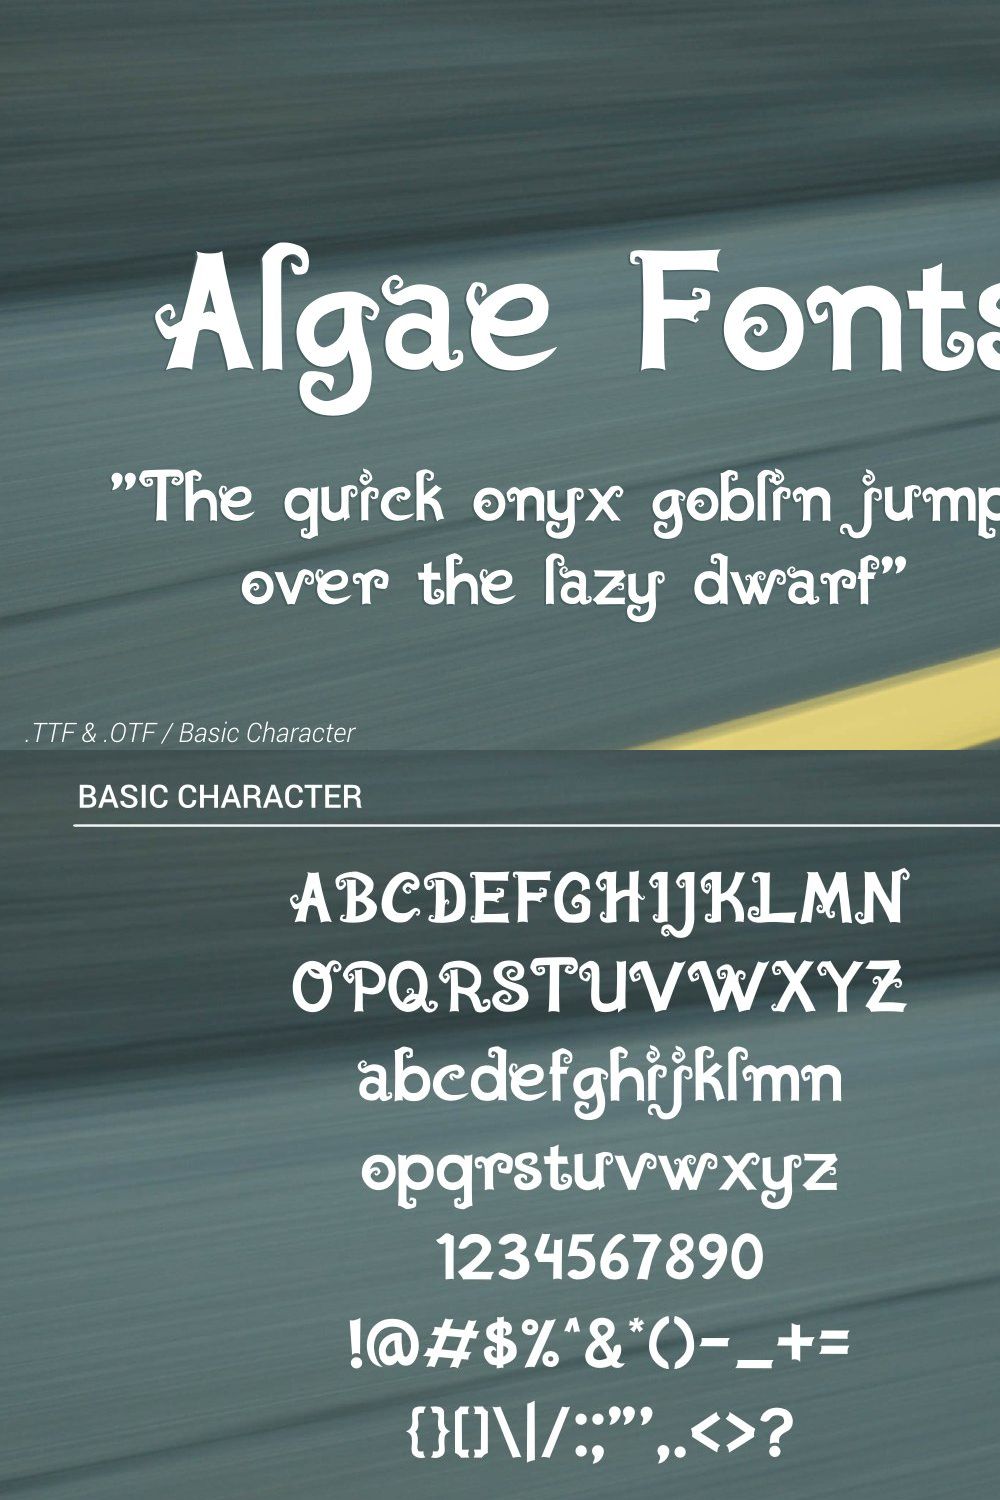 Algae Fonts - Fantasy pinterest preview image.